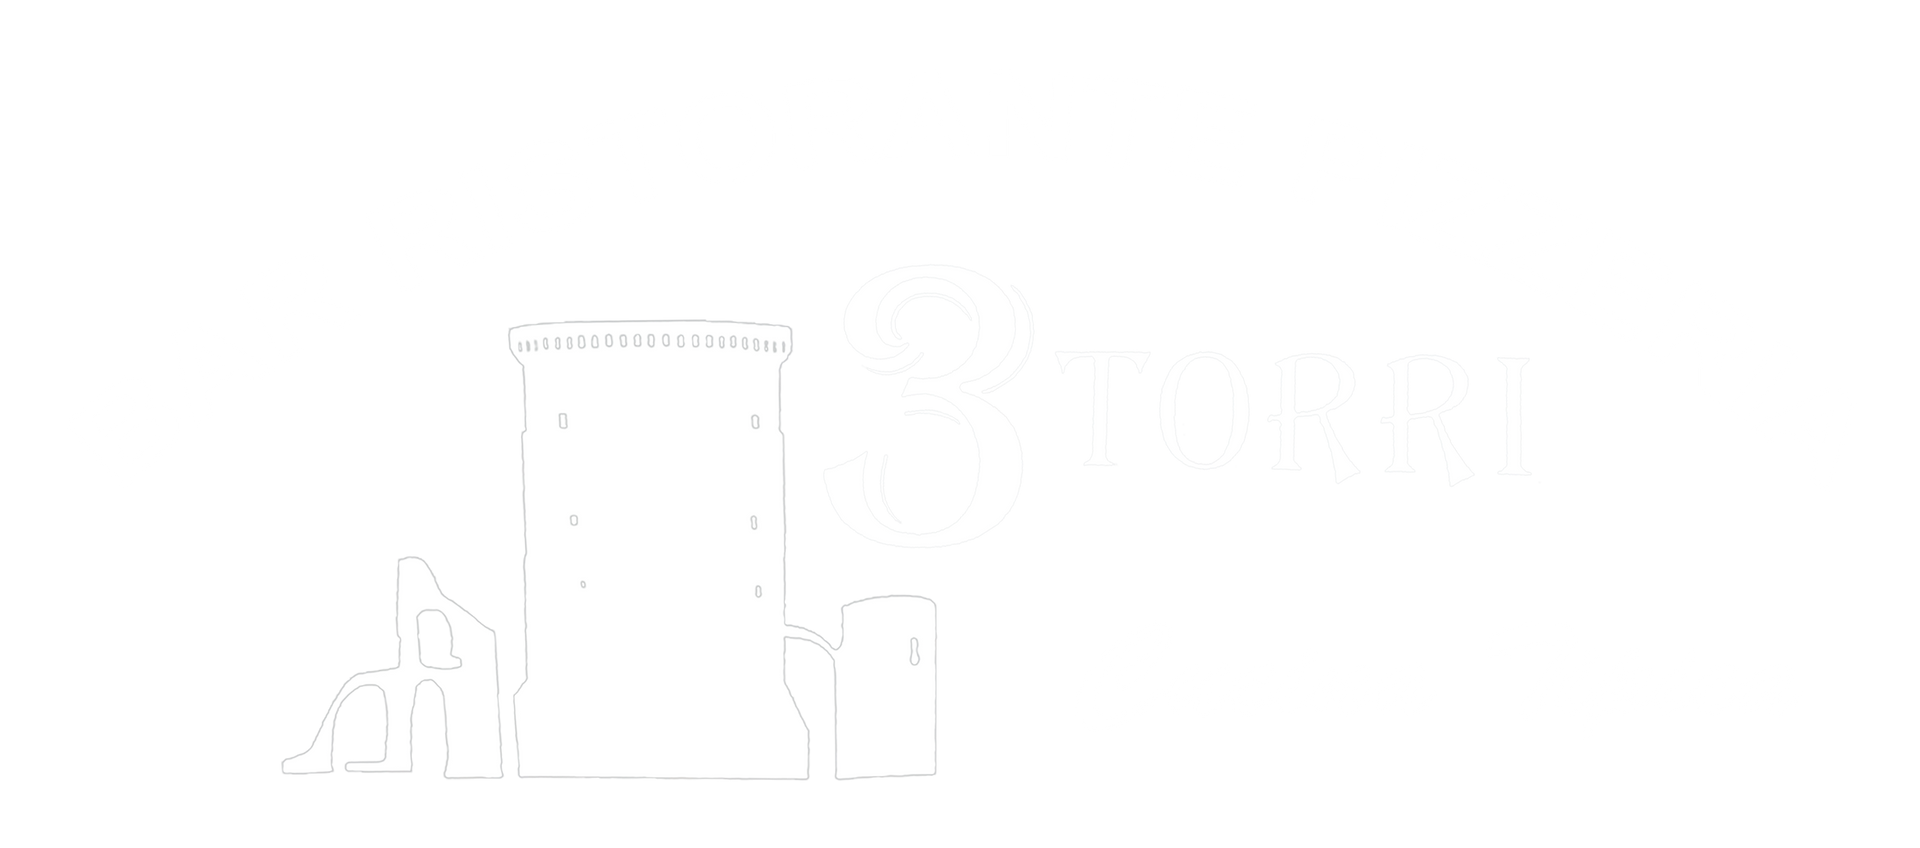 logo ristorante pizzeria 3 torri tricarico matera